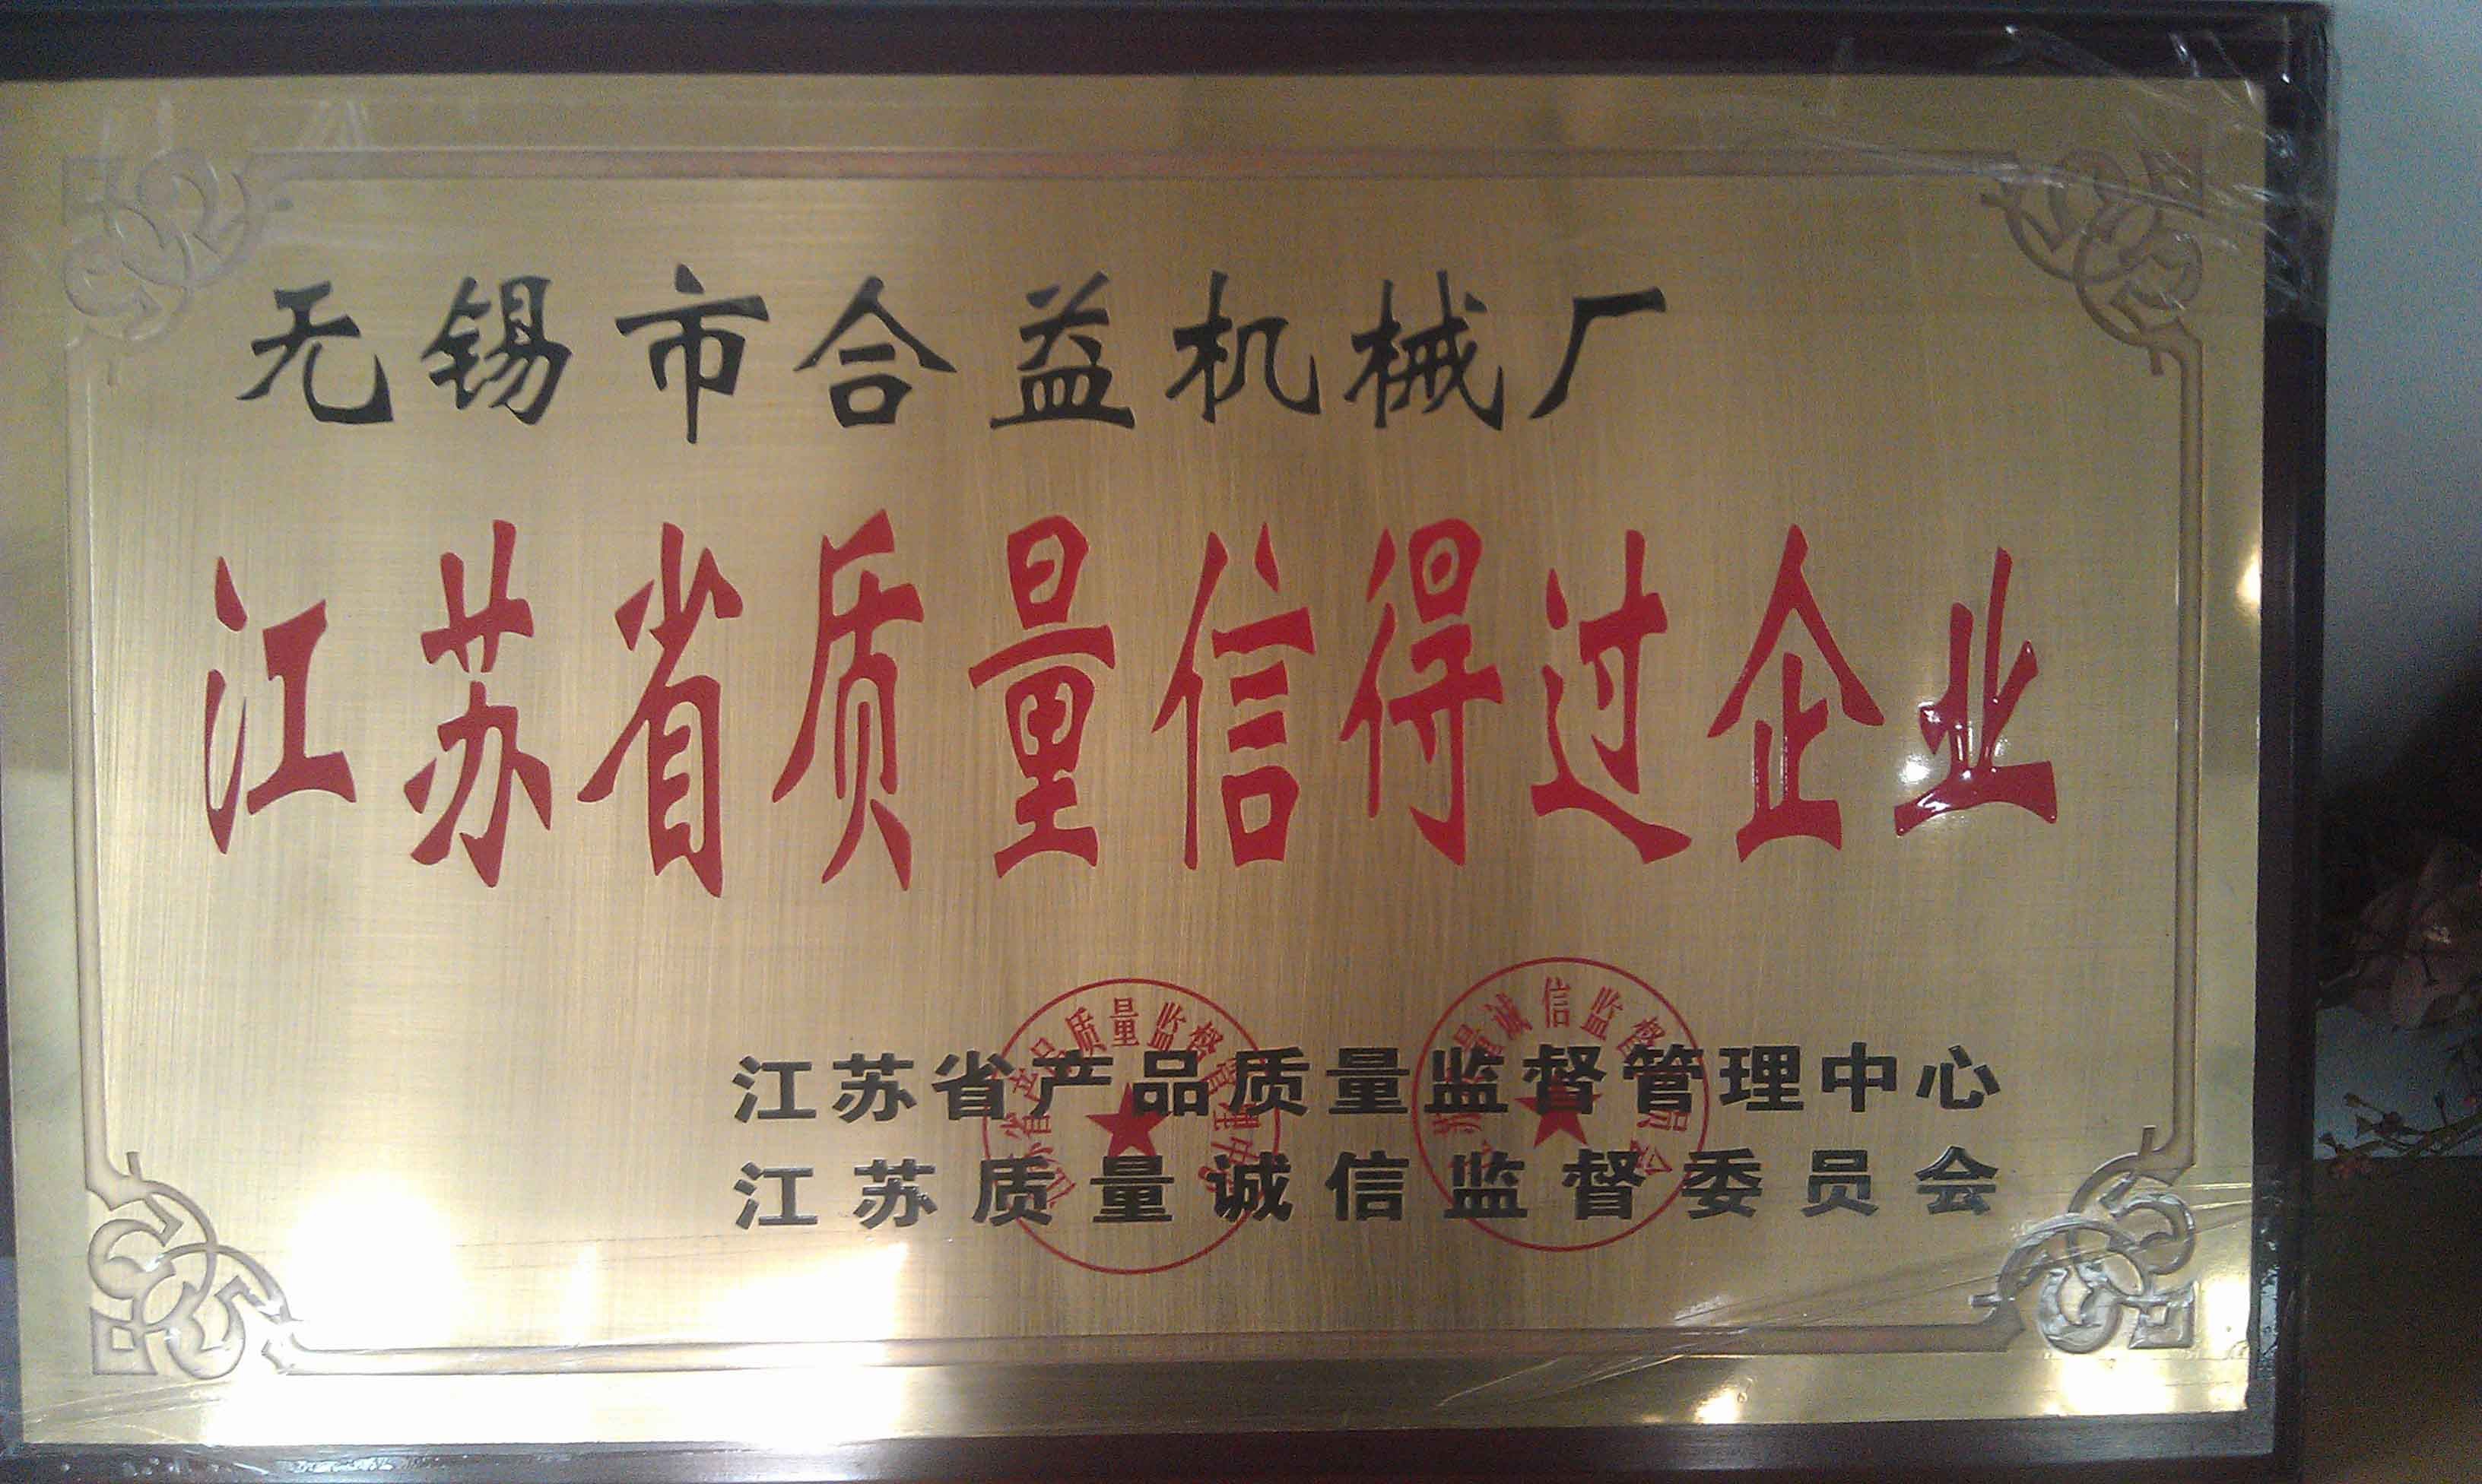 Chine Jiangsu New Heyi Machinery Co., Ltd Certifications